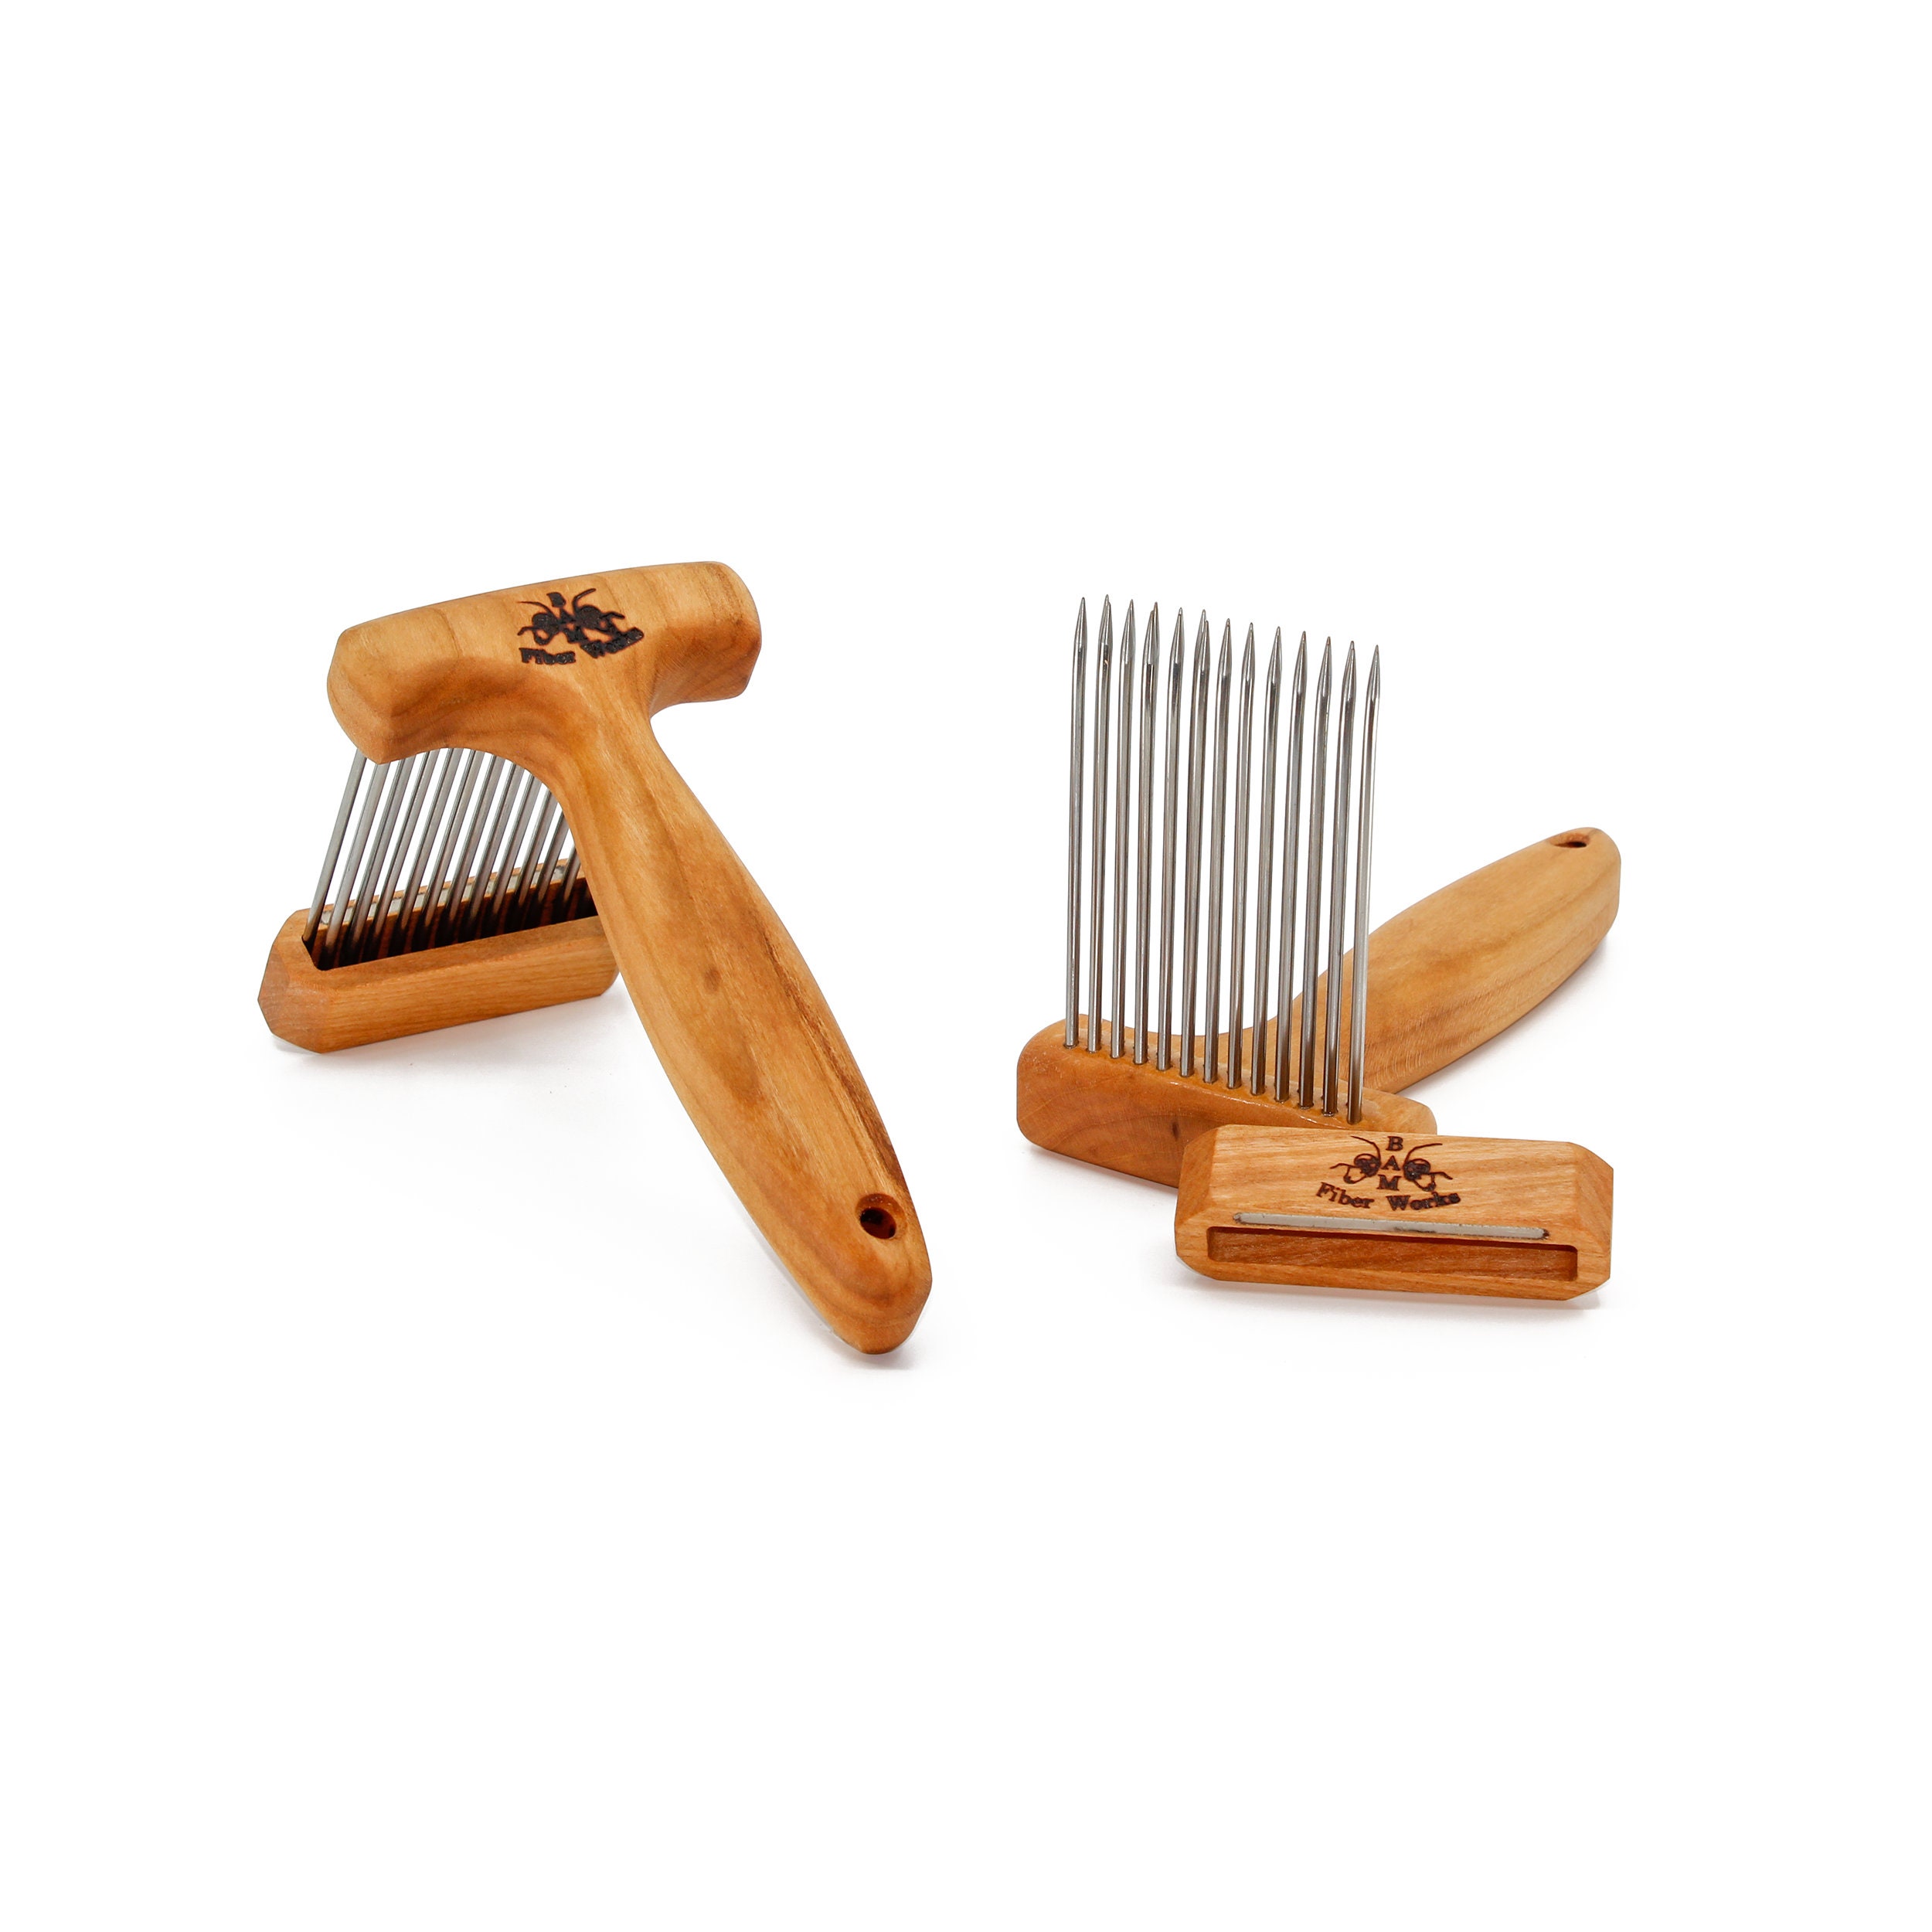 Mini Comb – Yarnworker Shop